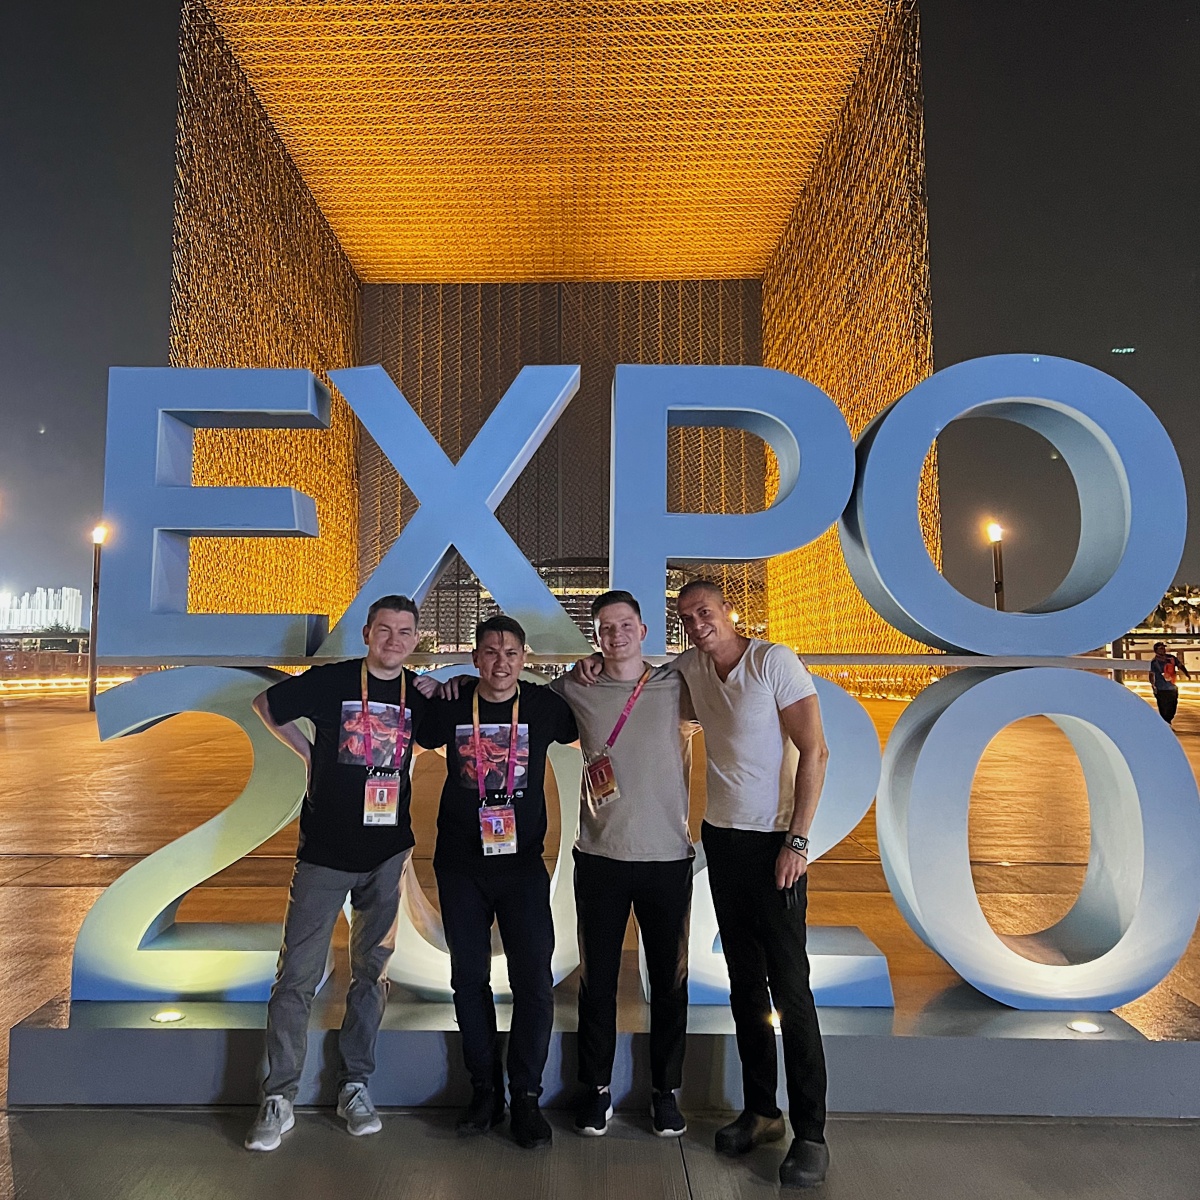   EXPO 2020